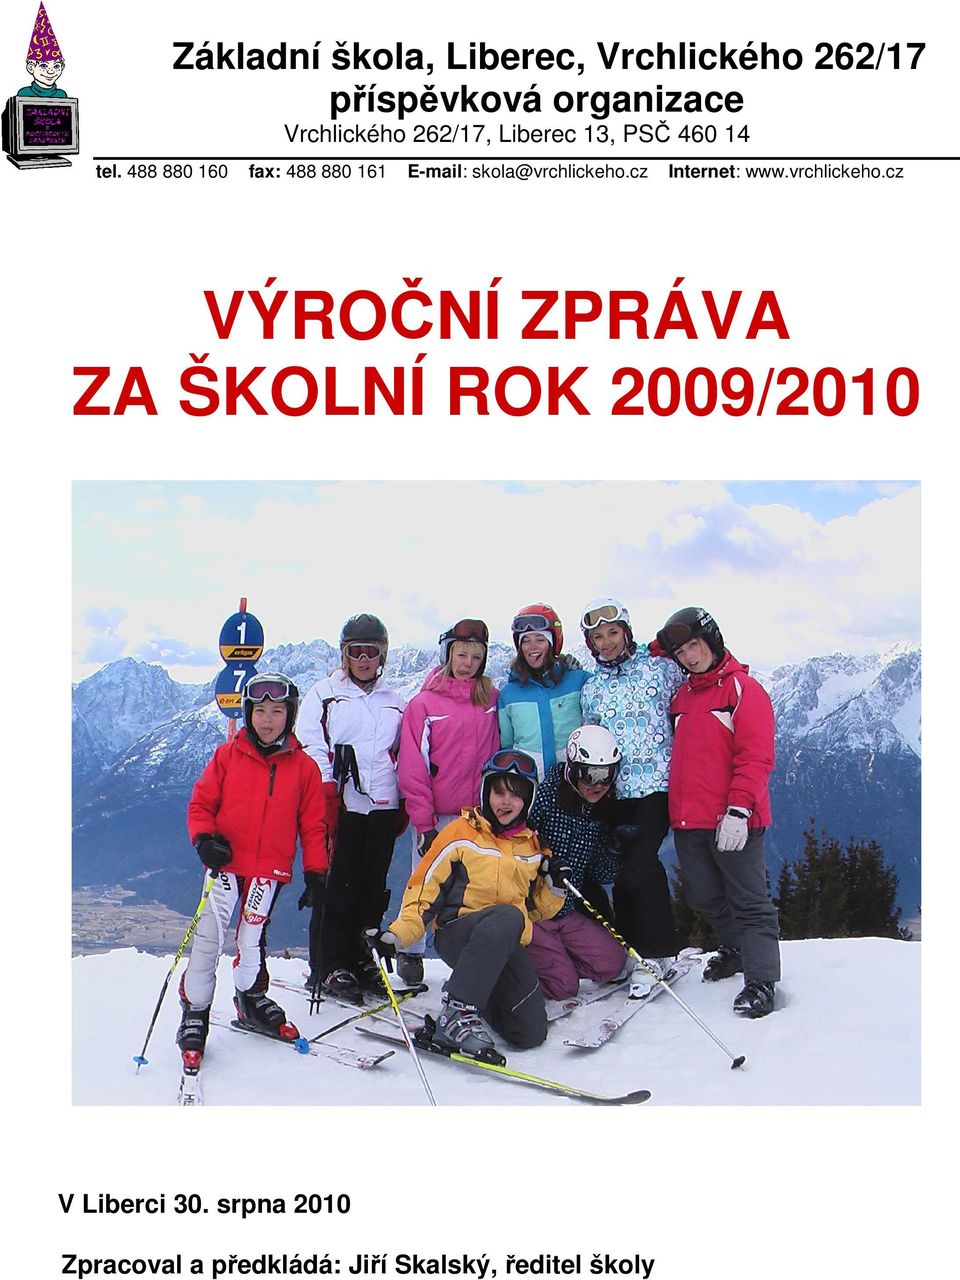 488 880 160 fax: 488 880 161 E-mail: skola@vrchlickeho.cz Internet: www.